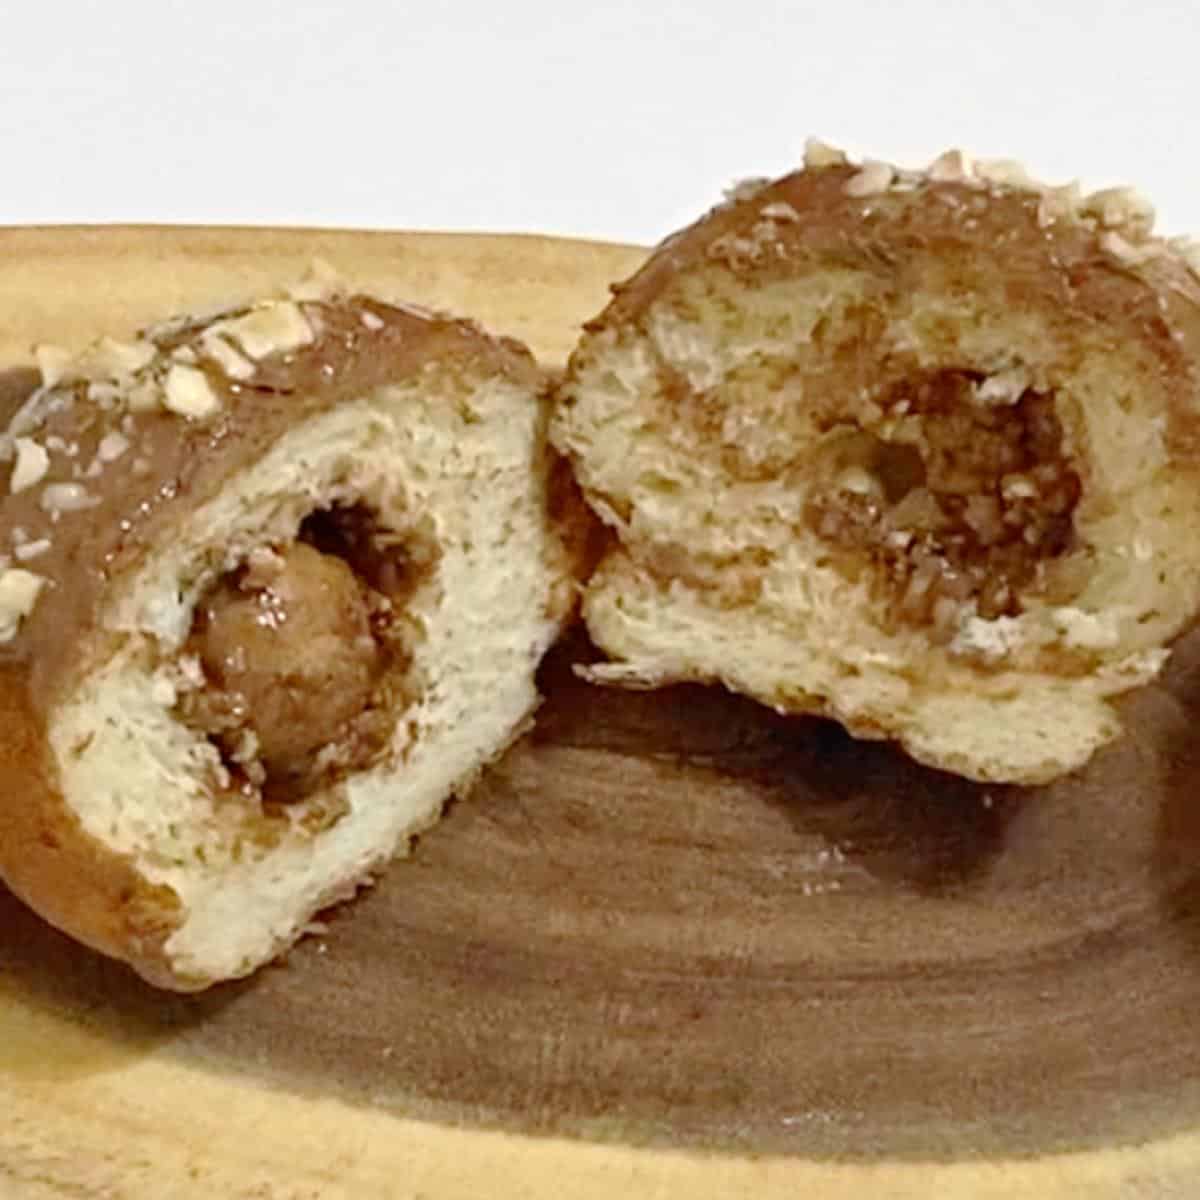 A sliced donut with ferro rocher.